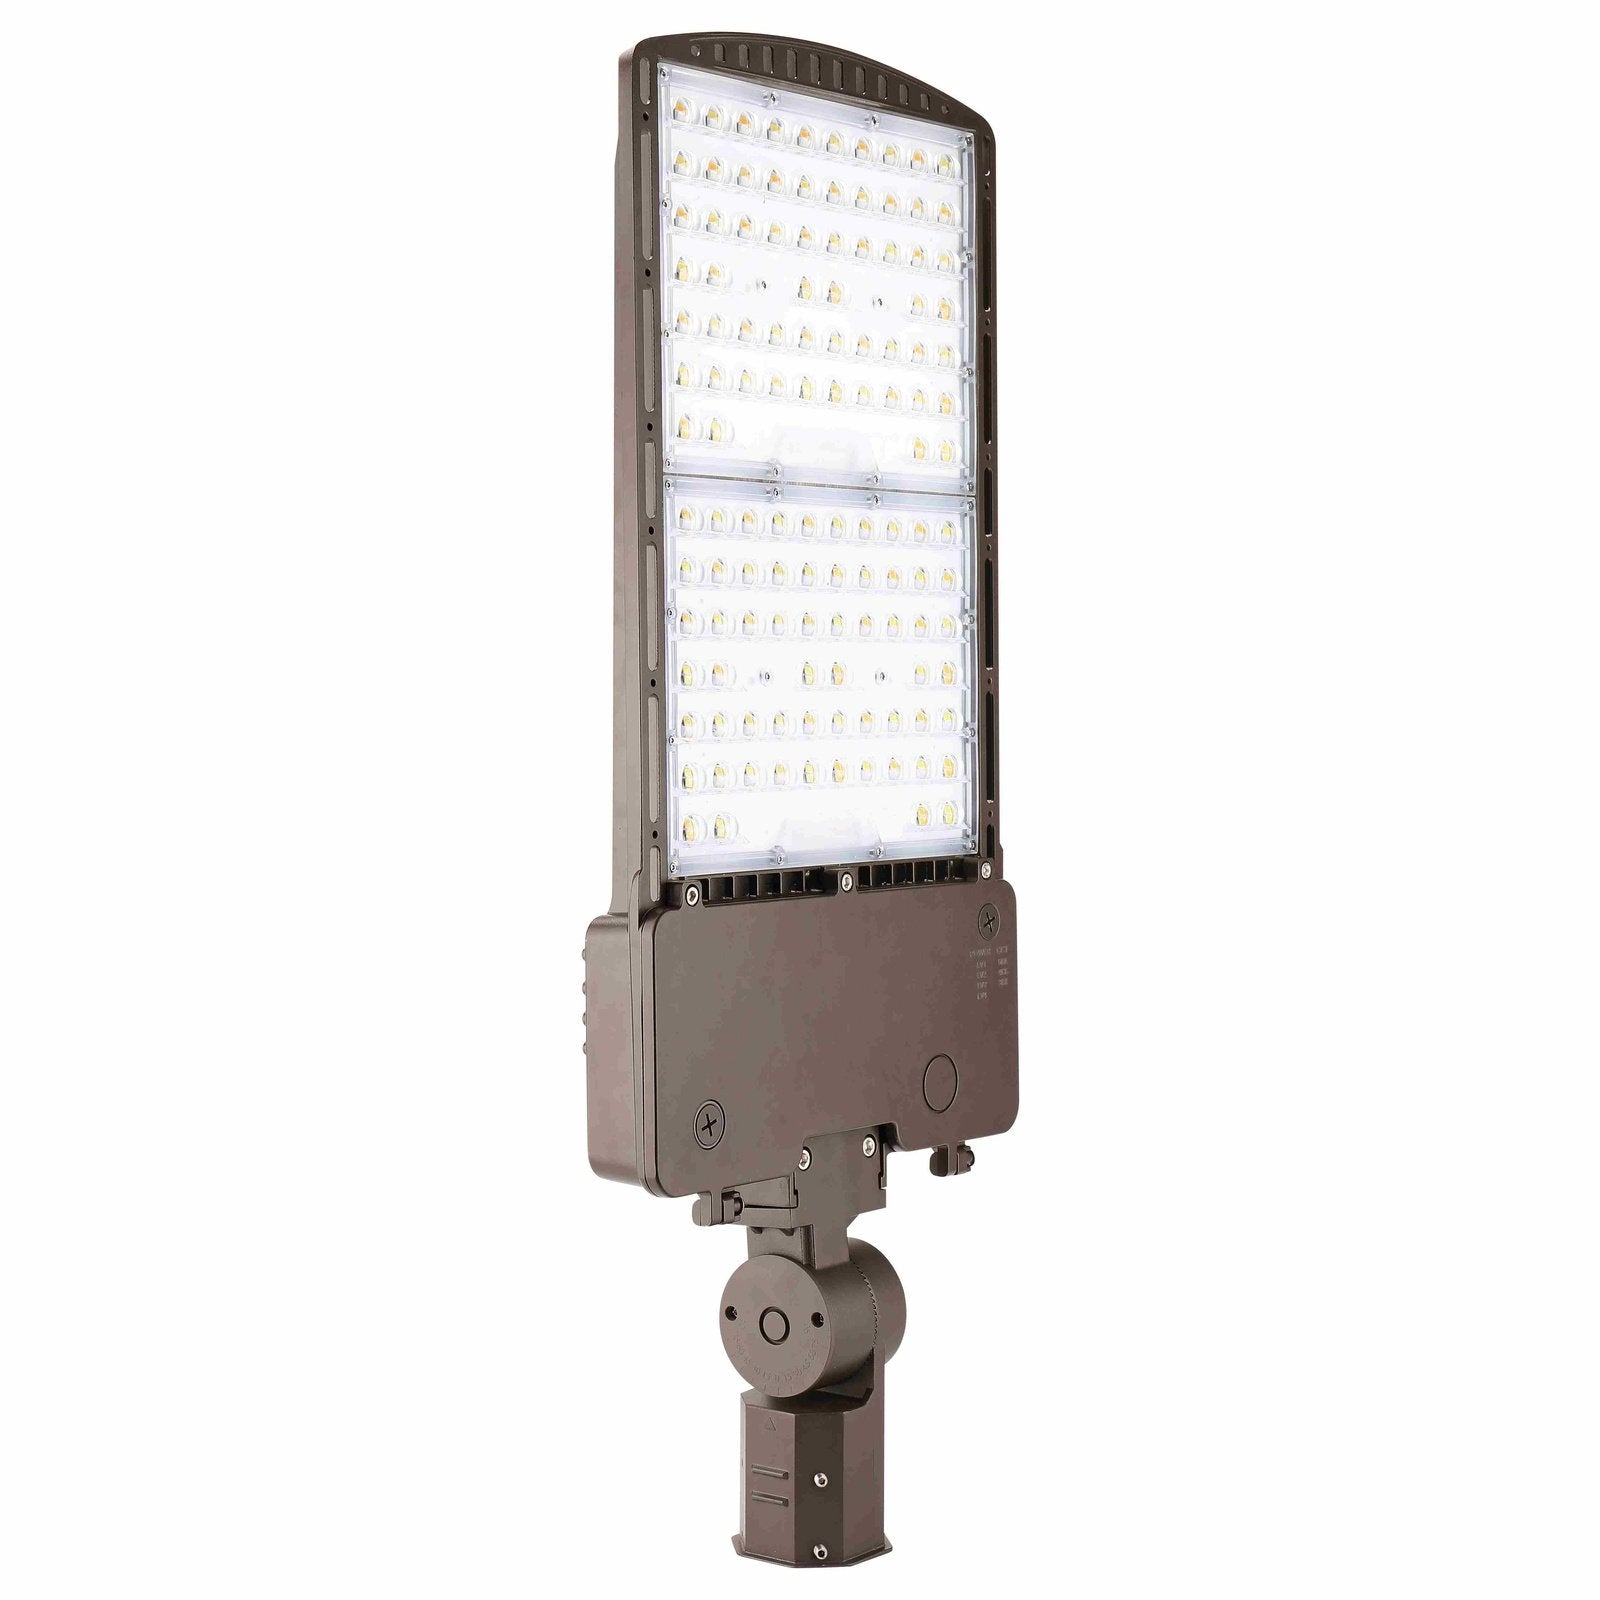 MAL08 LED Area Flood Light 300W 42000 Lumens 120-277VAC Type 3, CCT Selectable 5000K/4000K/3000K and Power Adjustable) - Dark Bronze